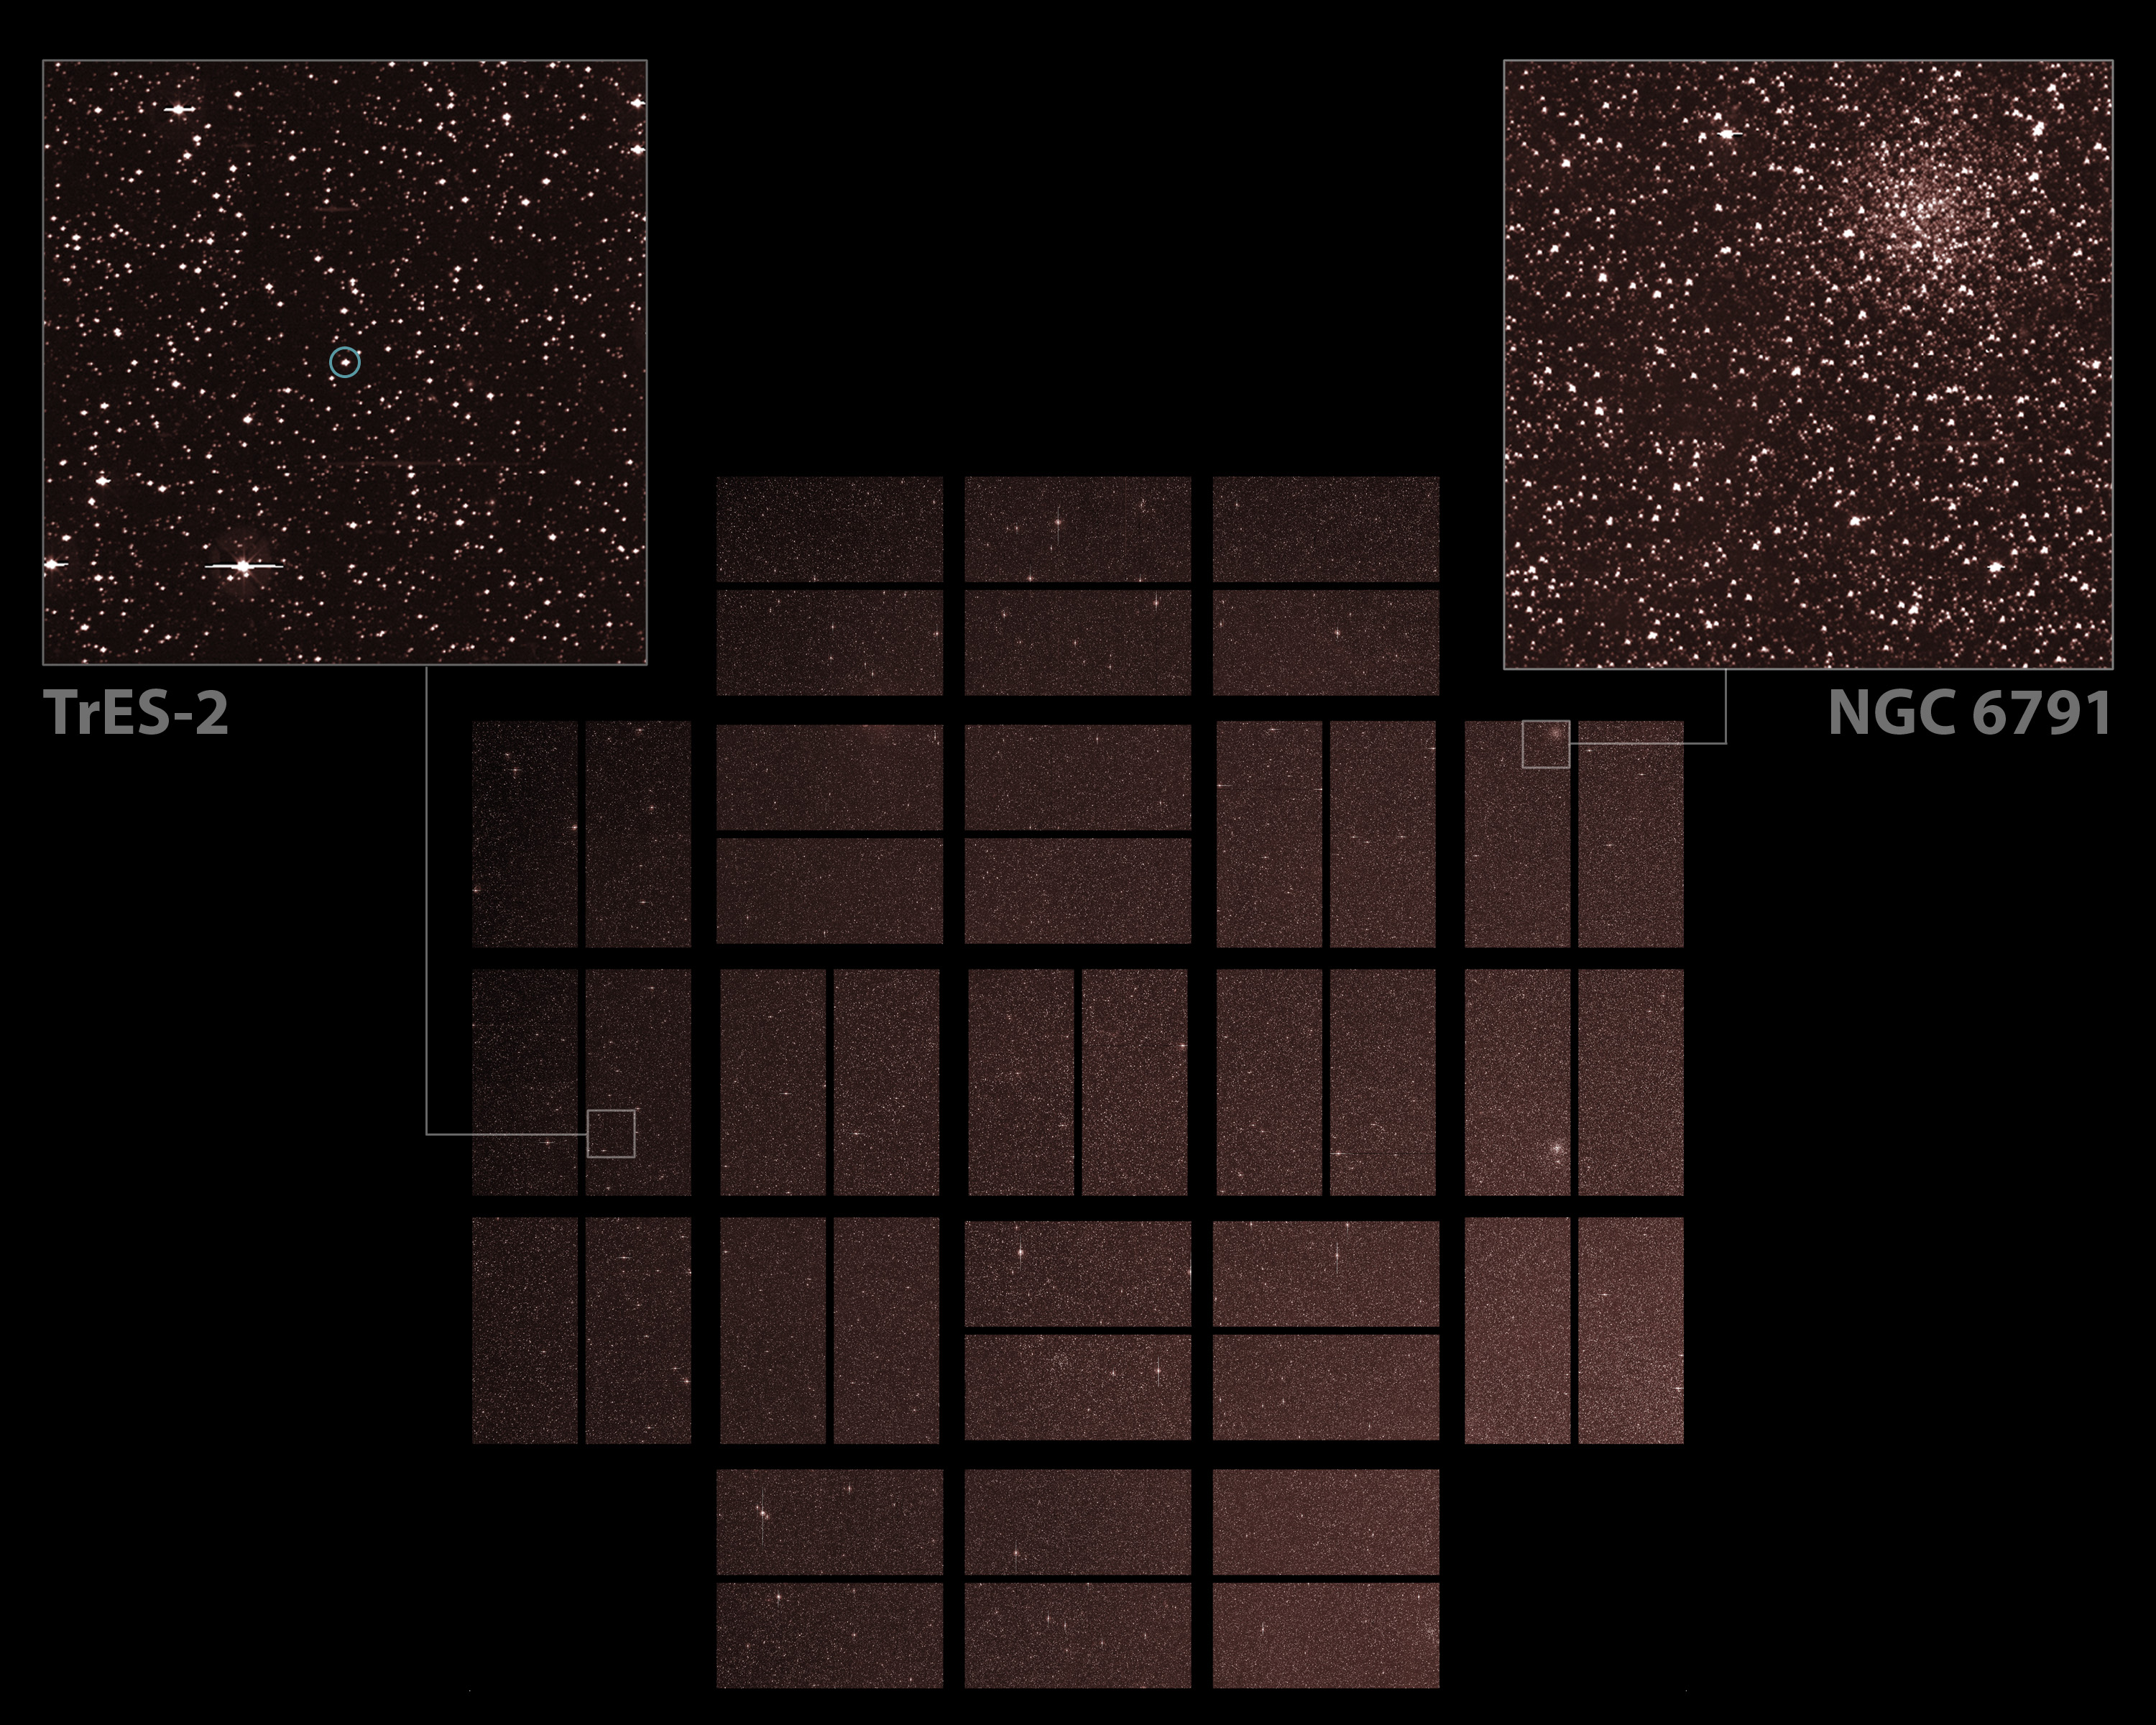 Two Zooms in the Kepler Field